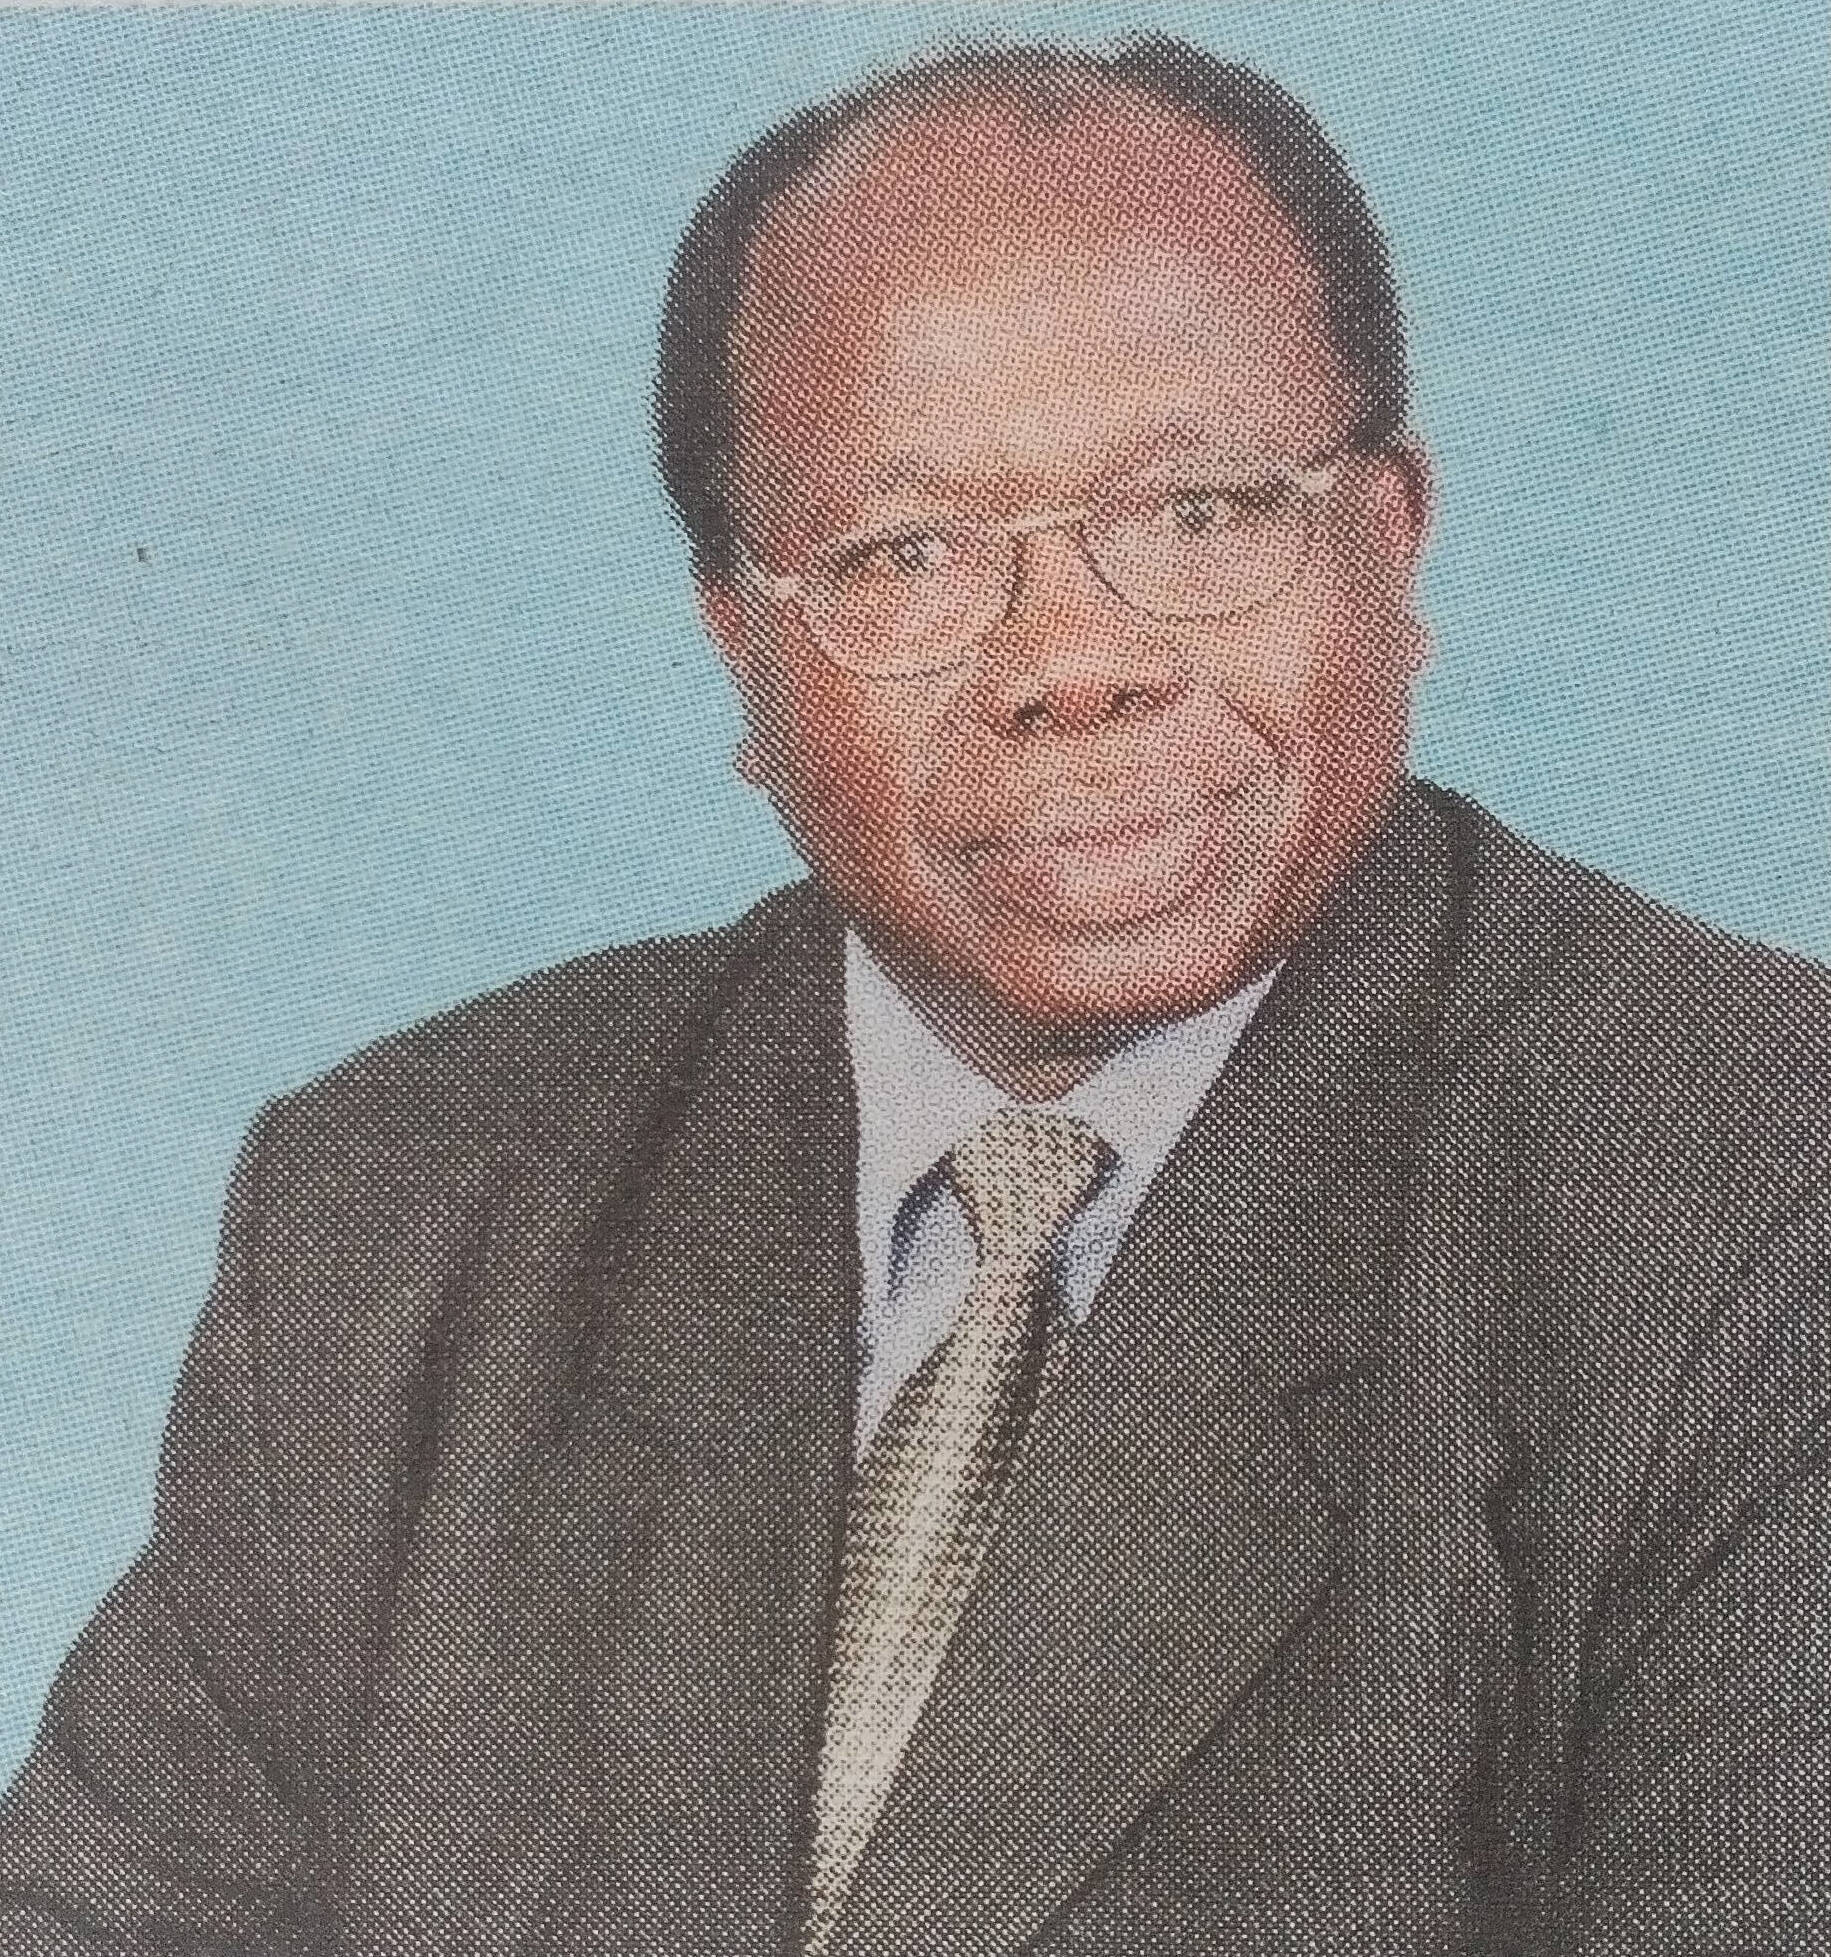 Obituary Image of Peter Joshua Mwangi (P.J)